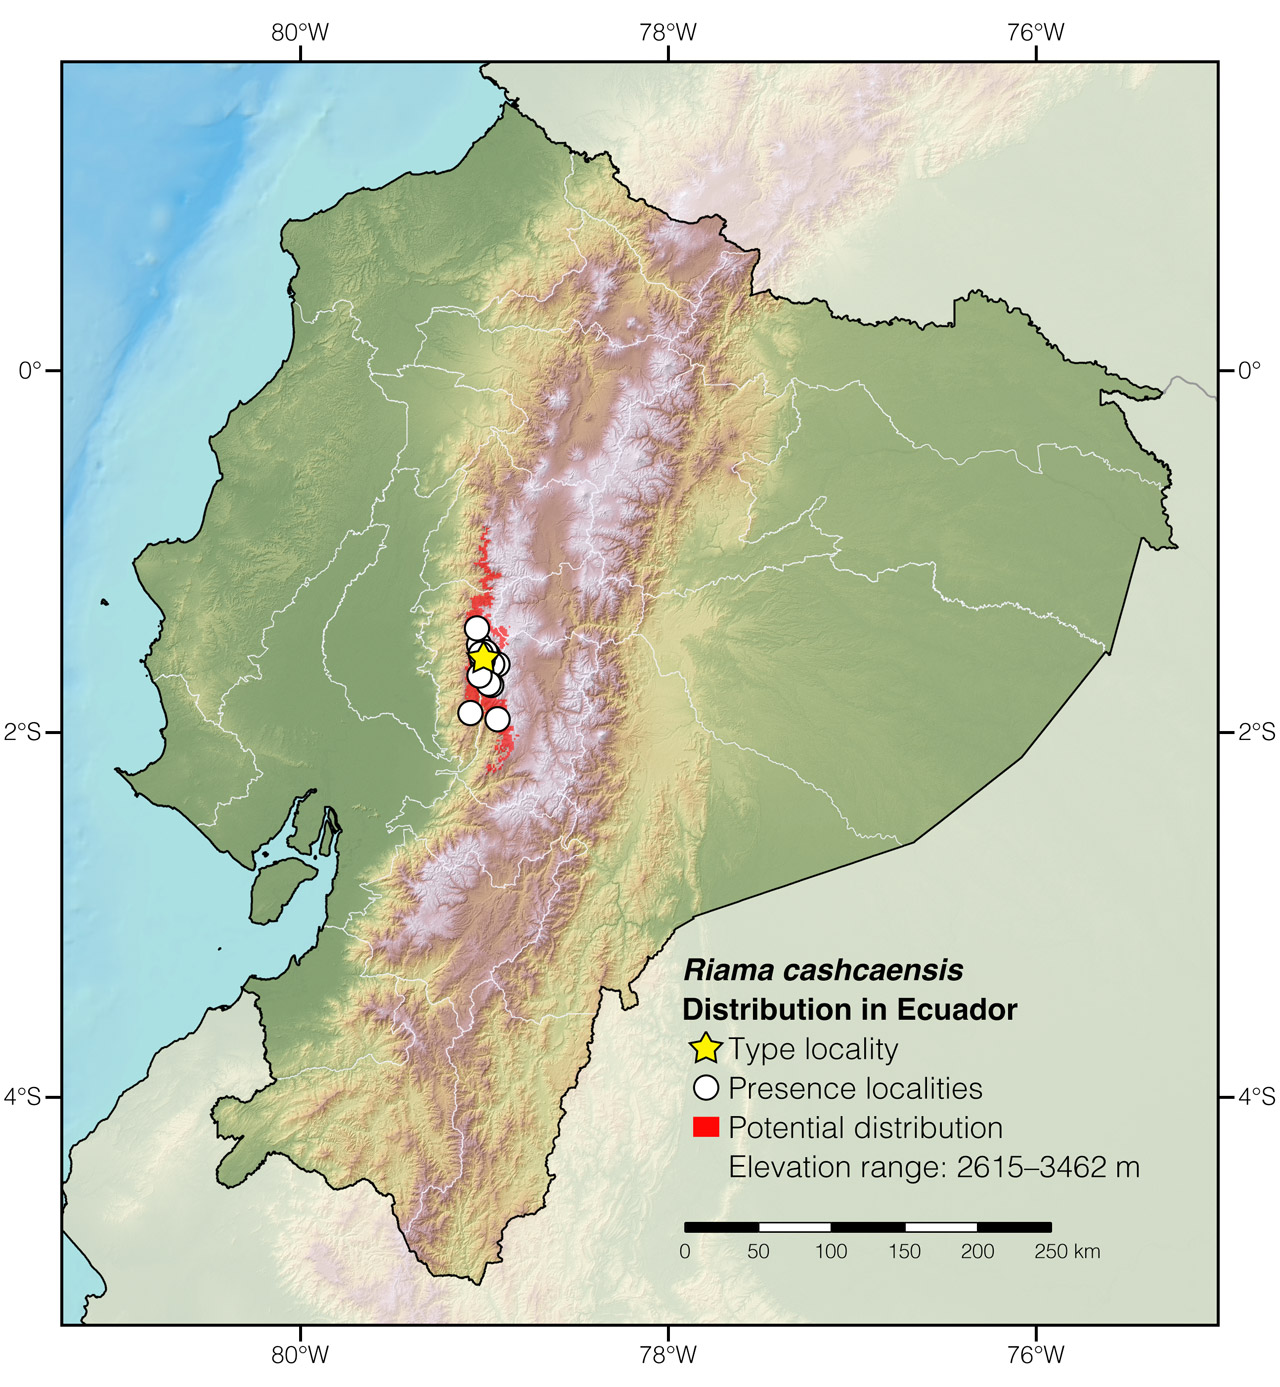 Distribution of Riama cashcaensis in Ecuador